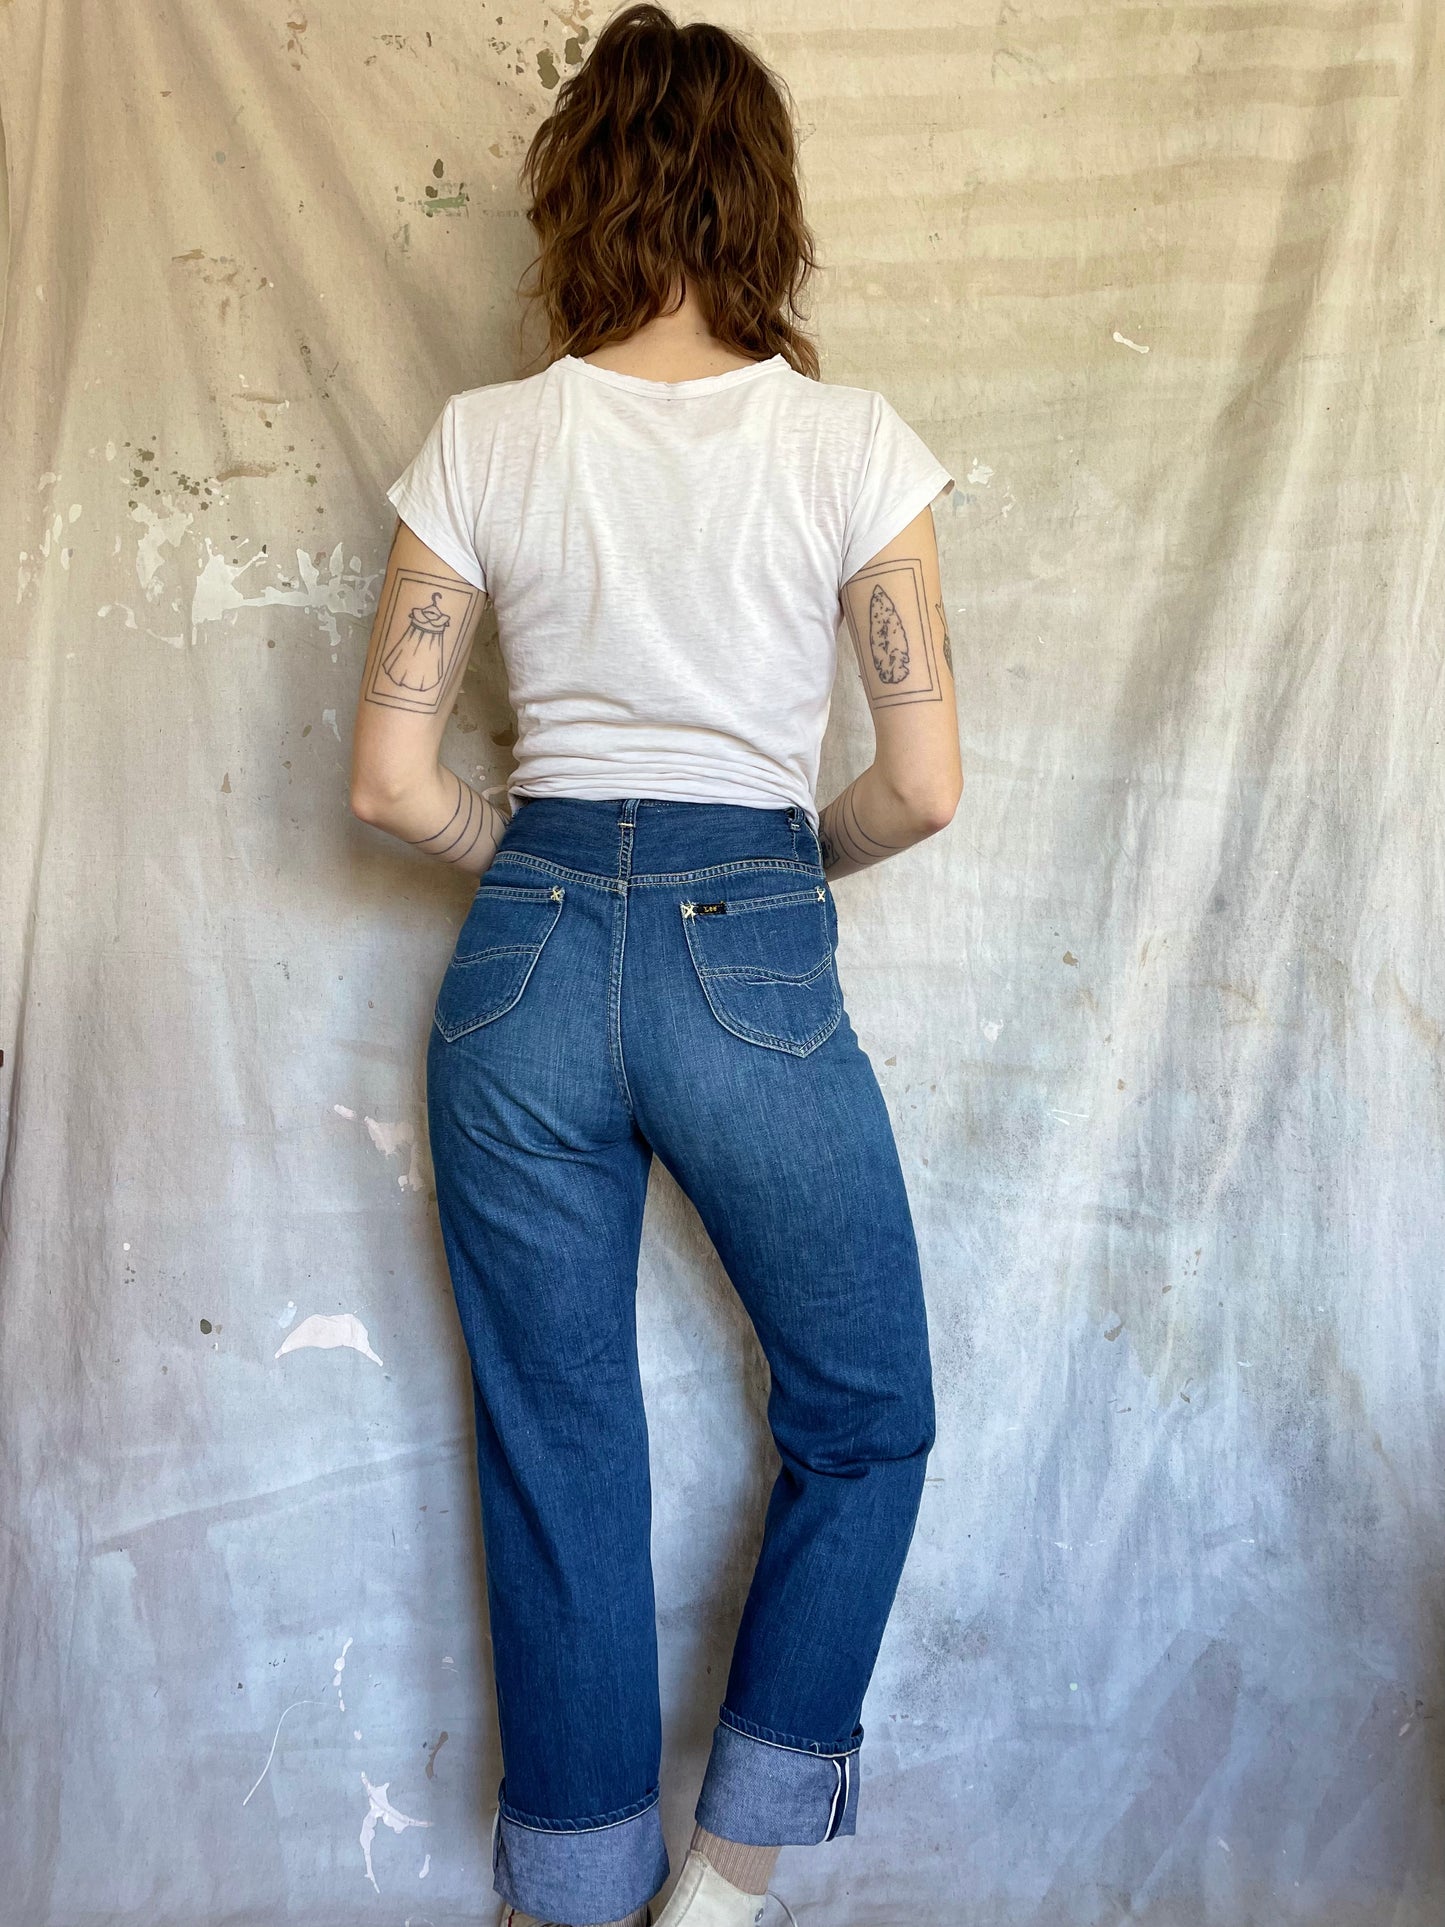 40s Lee Selvedge Denim Jeans